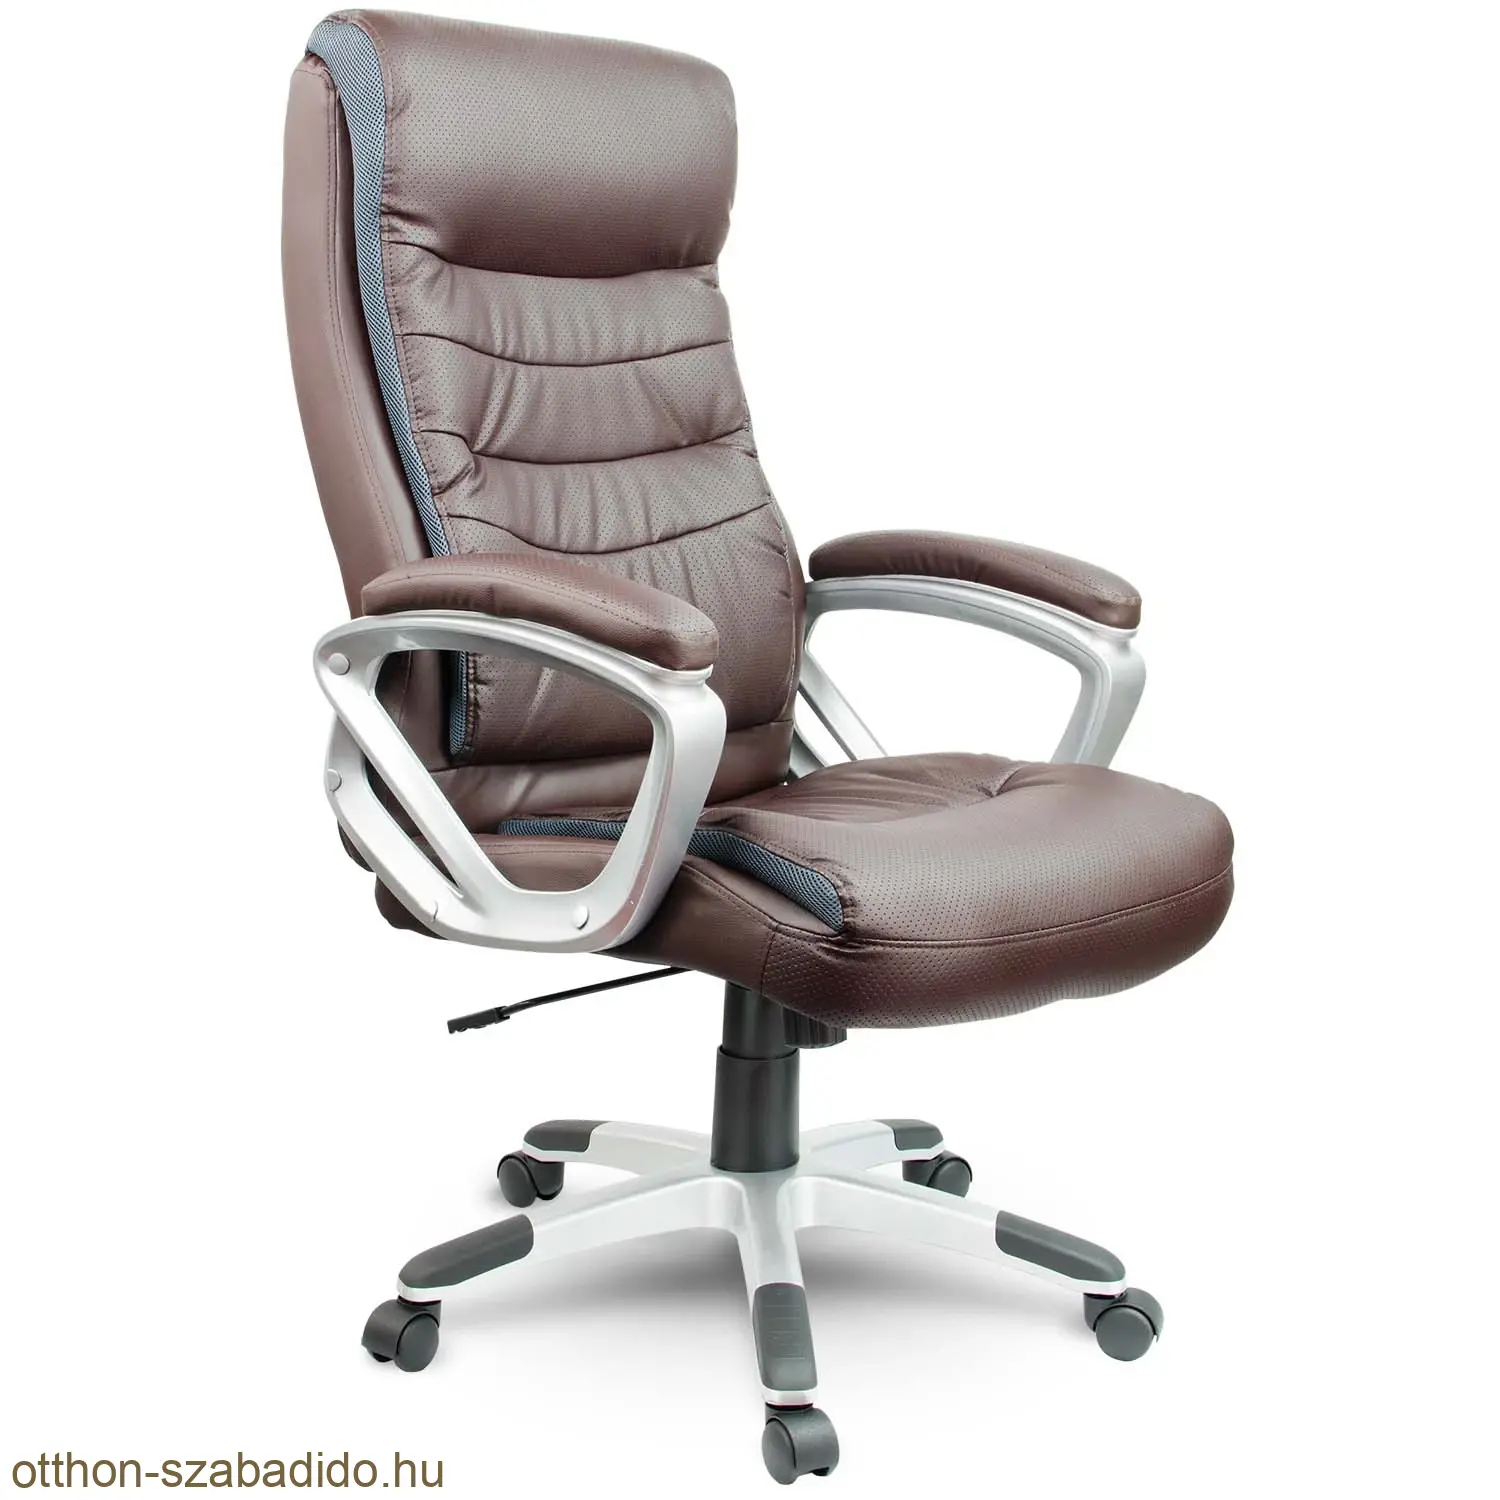 SOFOTEL bőr irodai szék EG-226 barna